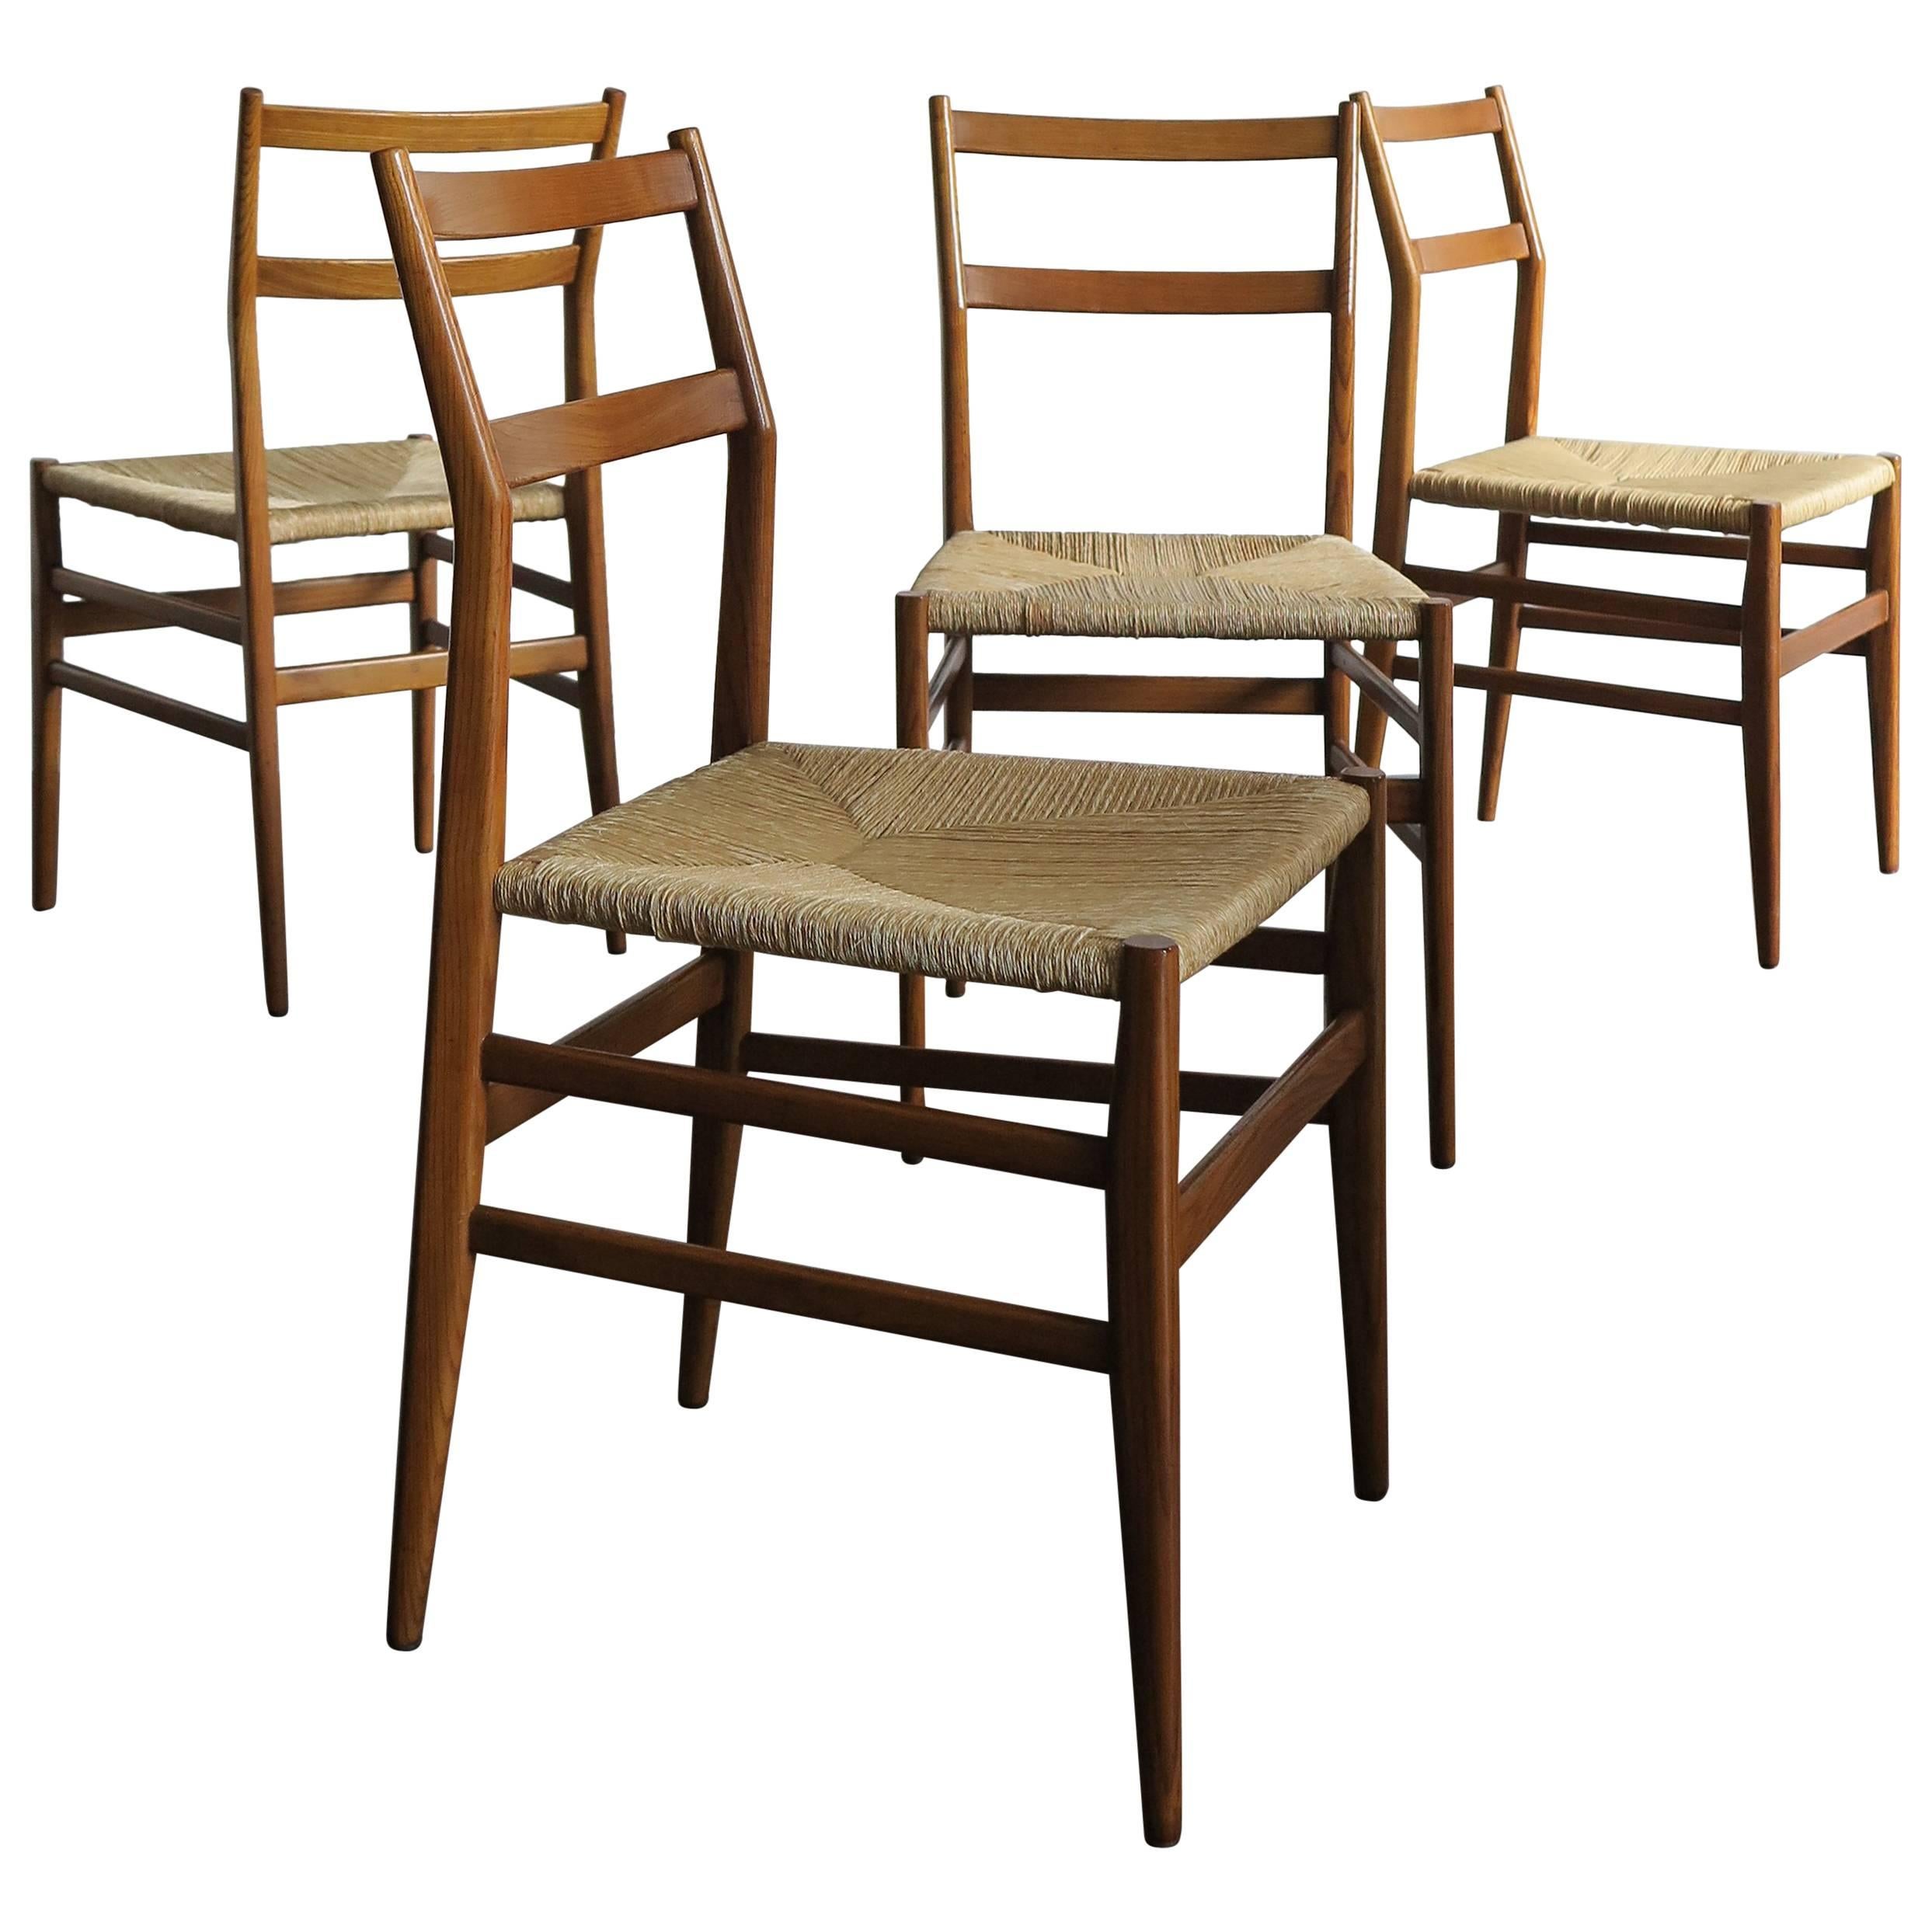 1950s Gio Ponti Italian Midcentury Design Dining Chairs "Leggera" for Cassina